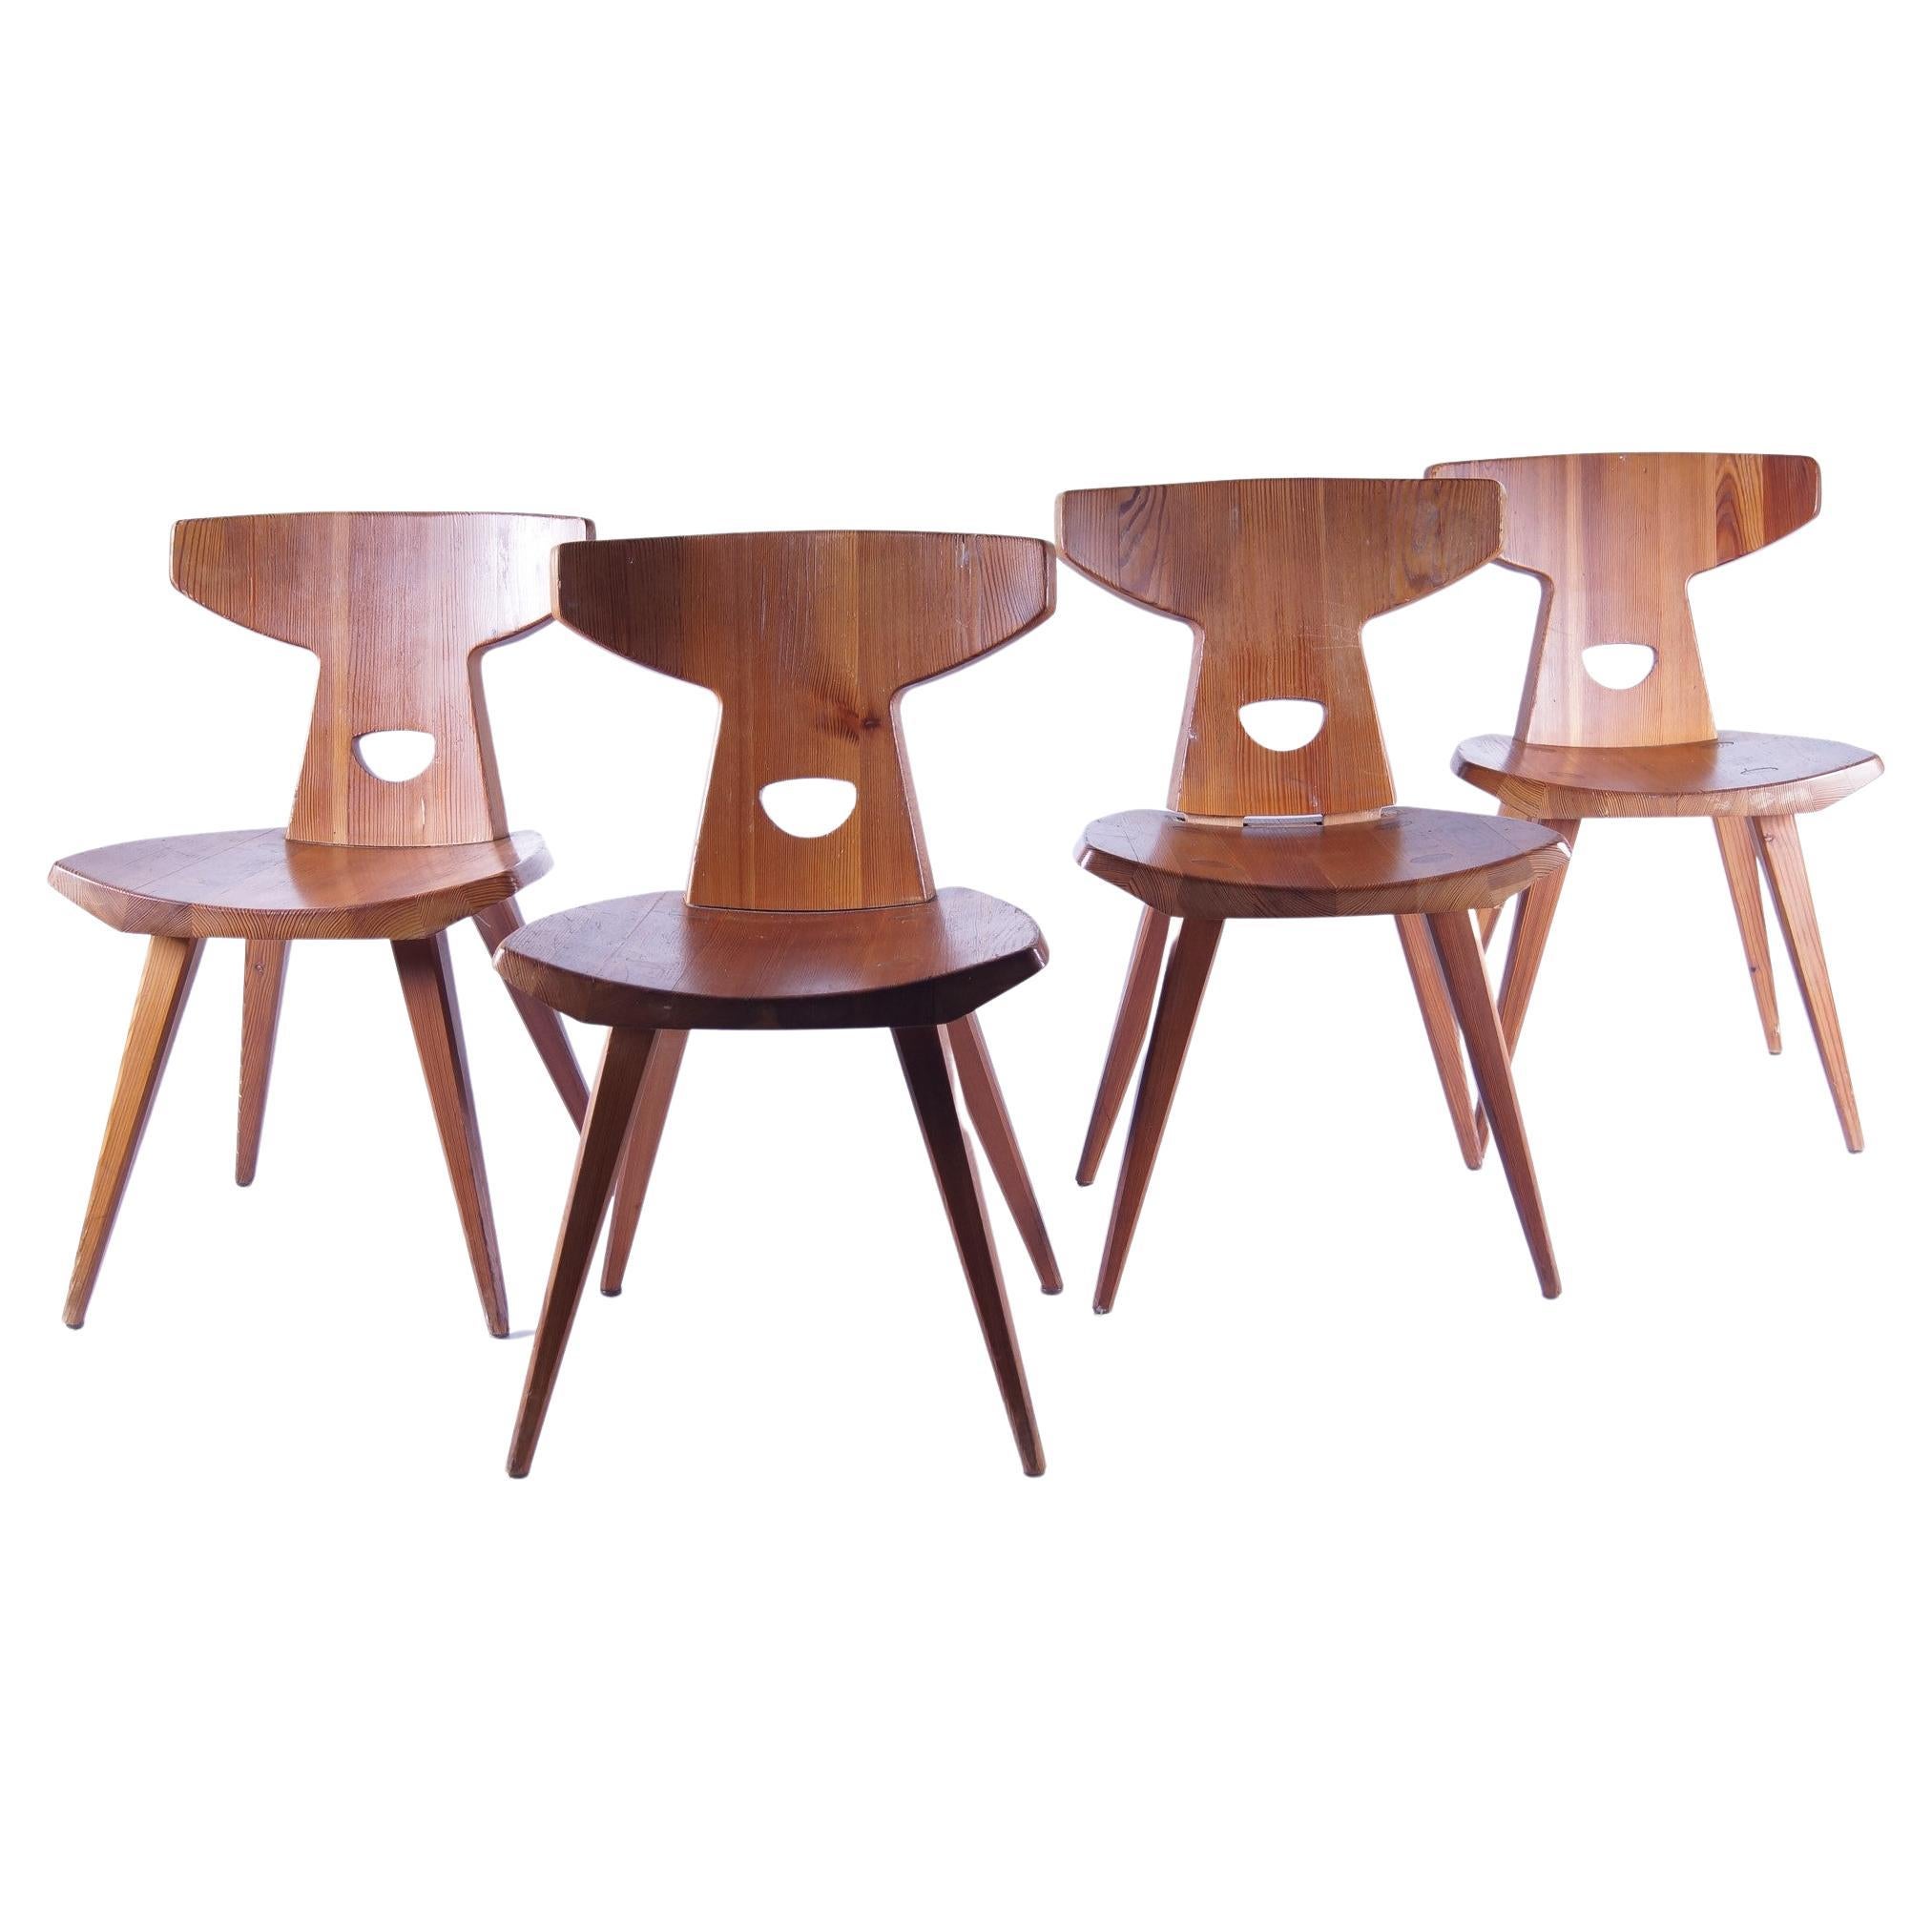 1960s Jacob Kielland-Brandt Dining Room Chairs for I. Christiansen, Set of 4